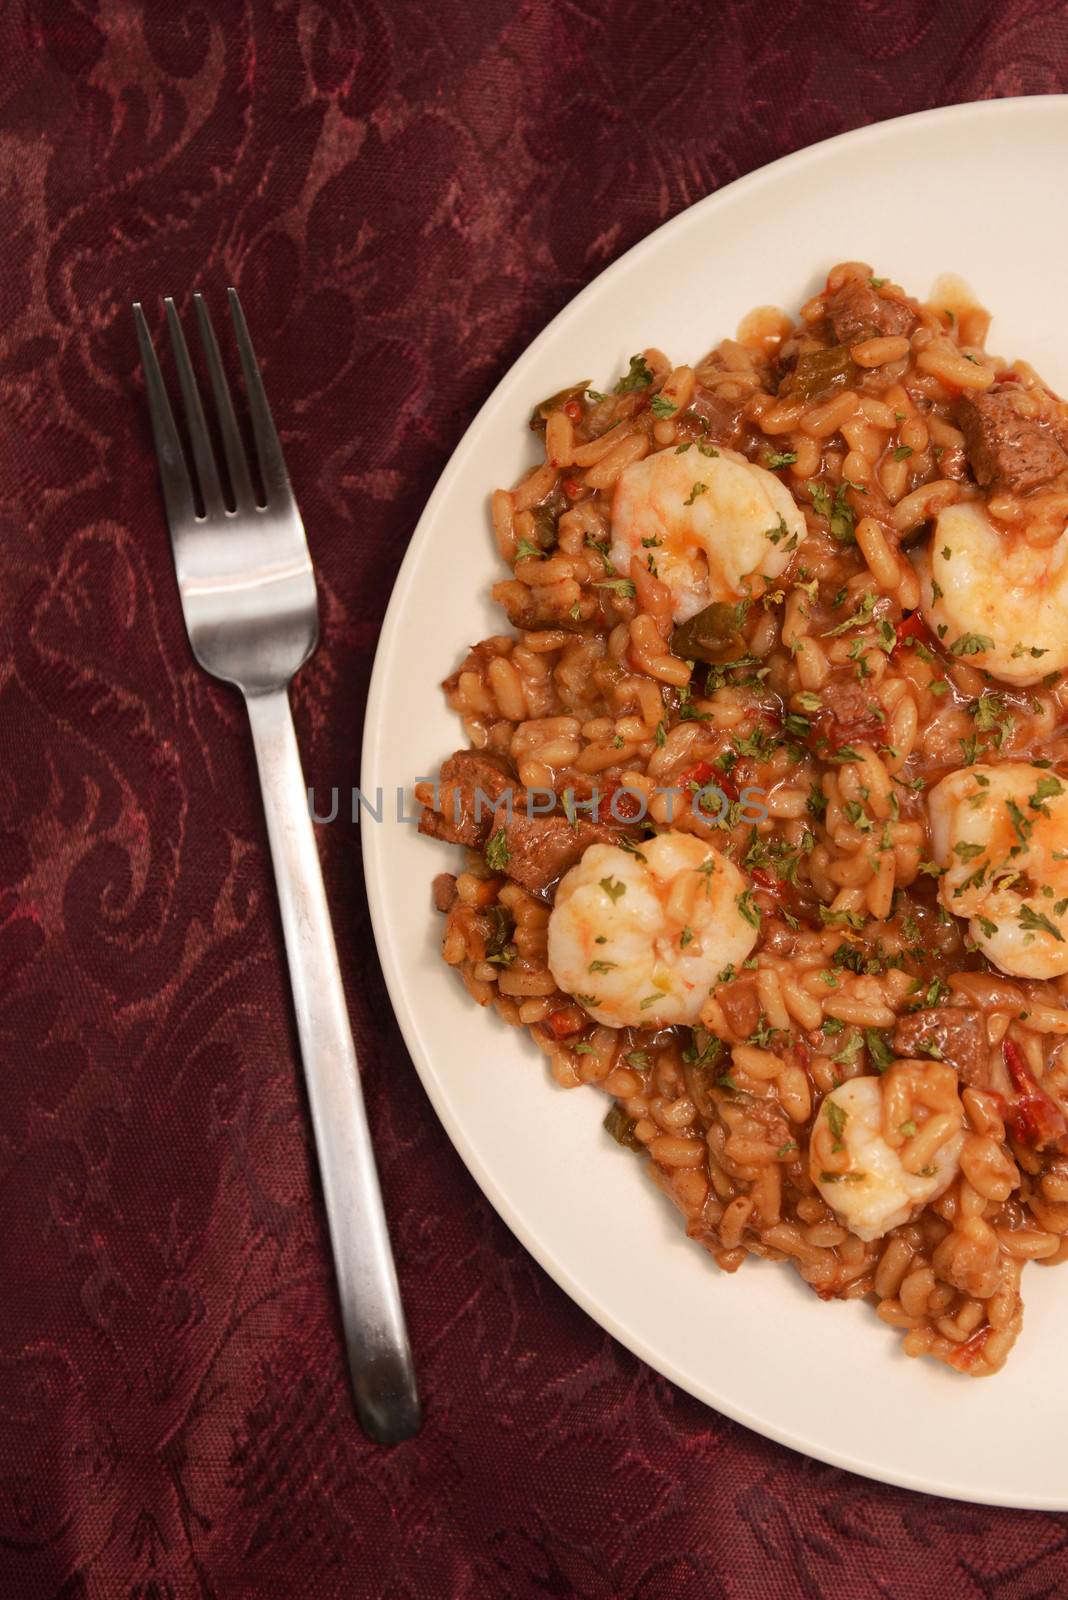 jambalaya with shrimp by ftlaudgirl